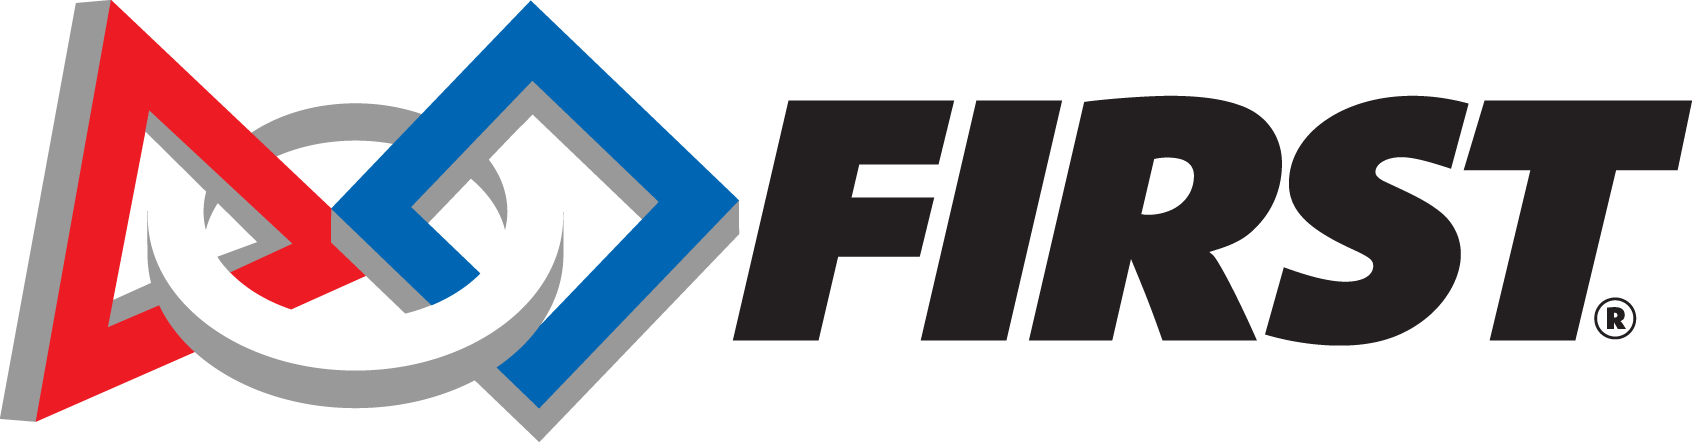 Minnesota FTC State Championships logo